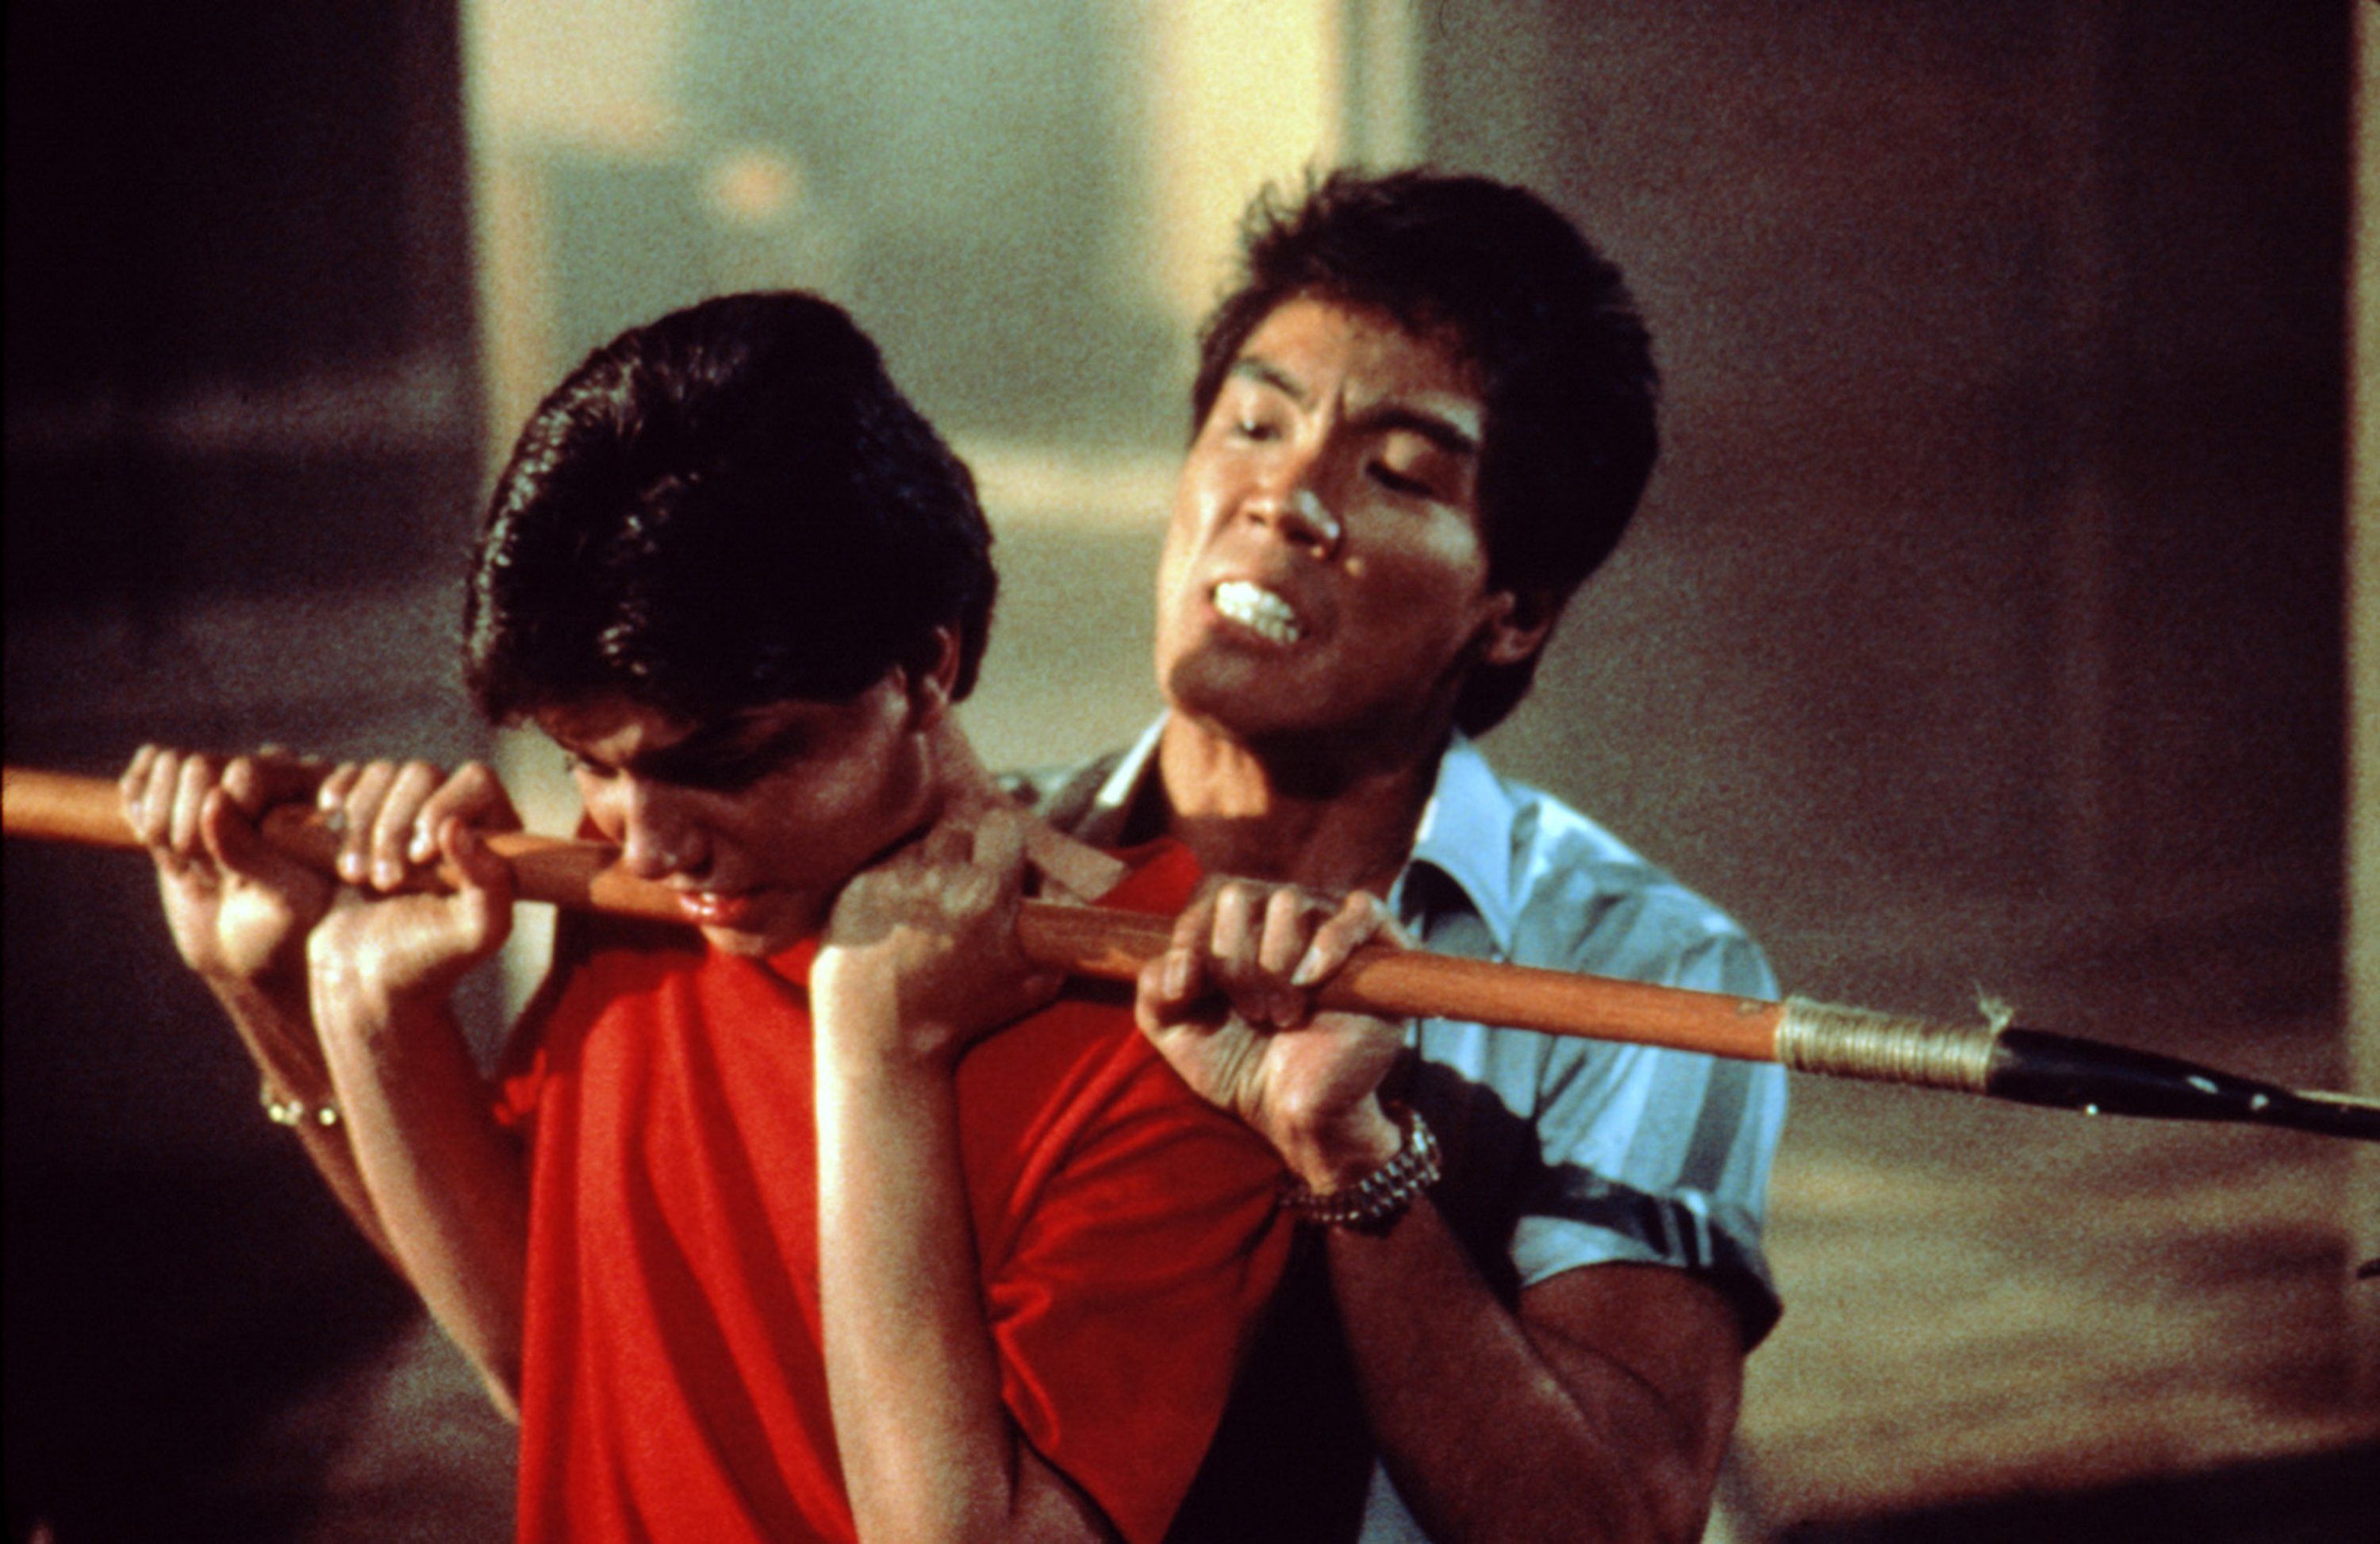 Ralph Macchio and Yuji Okumoto in The Karate Kid Part II